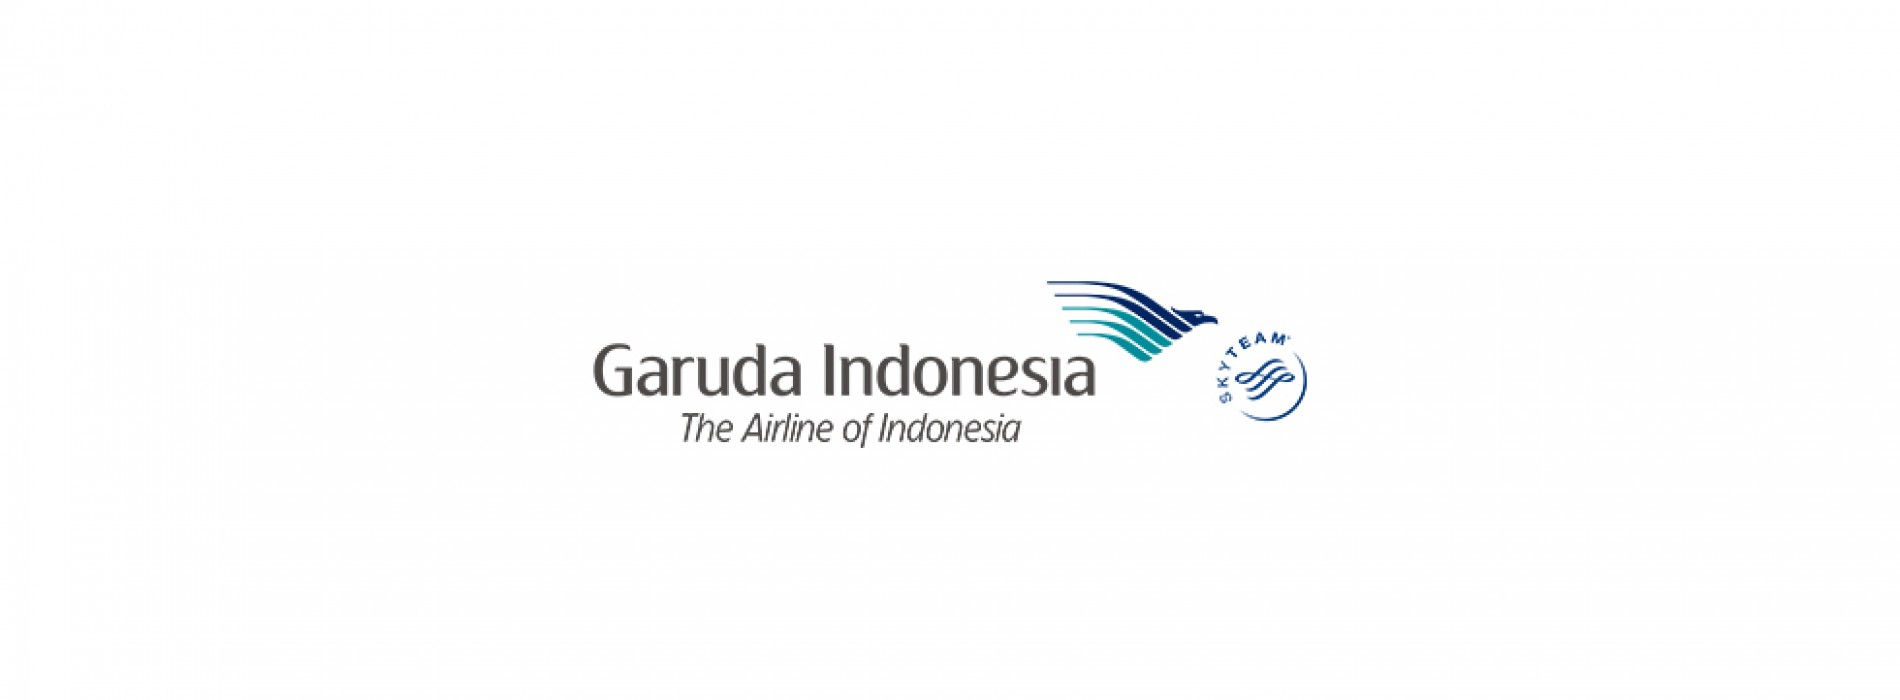 Garuda opens a passage to India